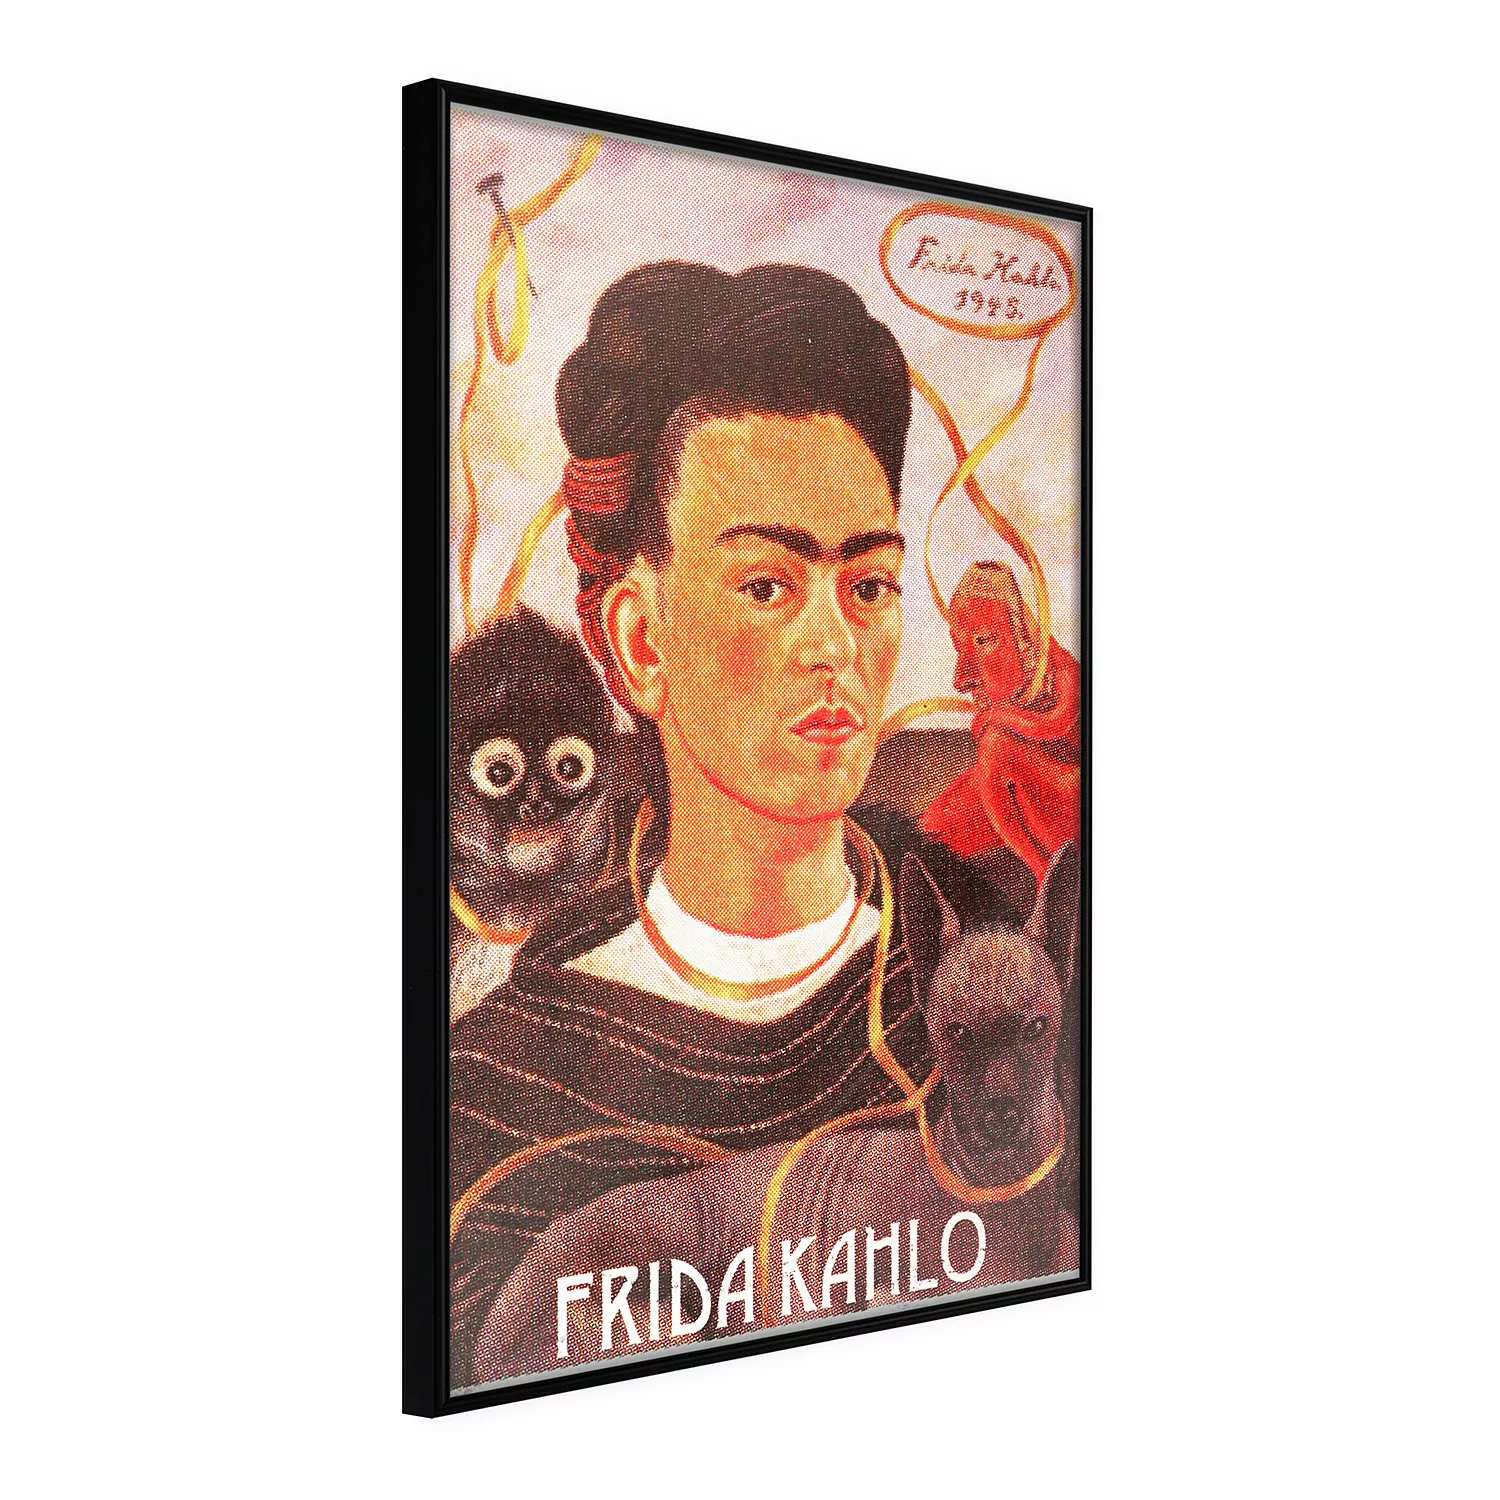 home24 Poster Frida Kahlo günstig online kaufen